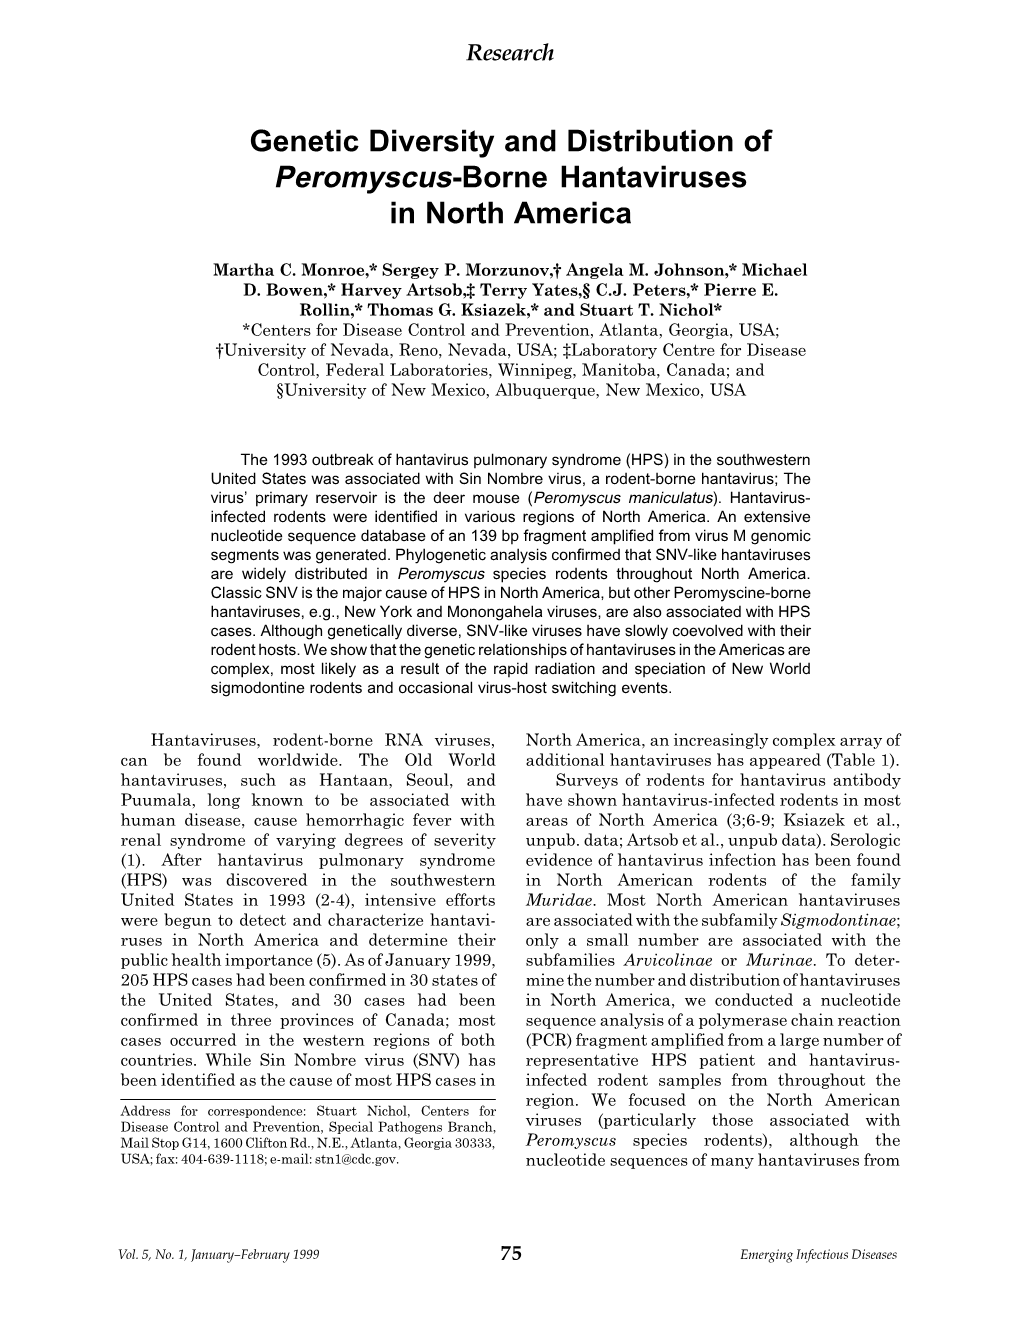 Genetic Diversity and Distribution of Peromyscus-Borne Hantaviruses in North America